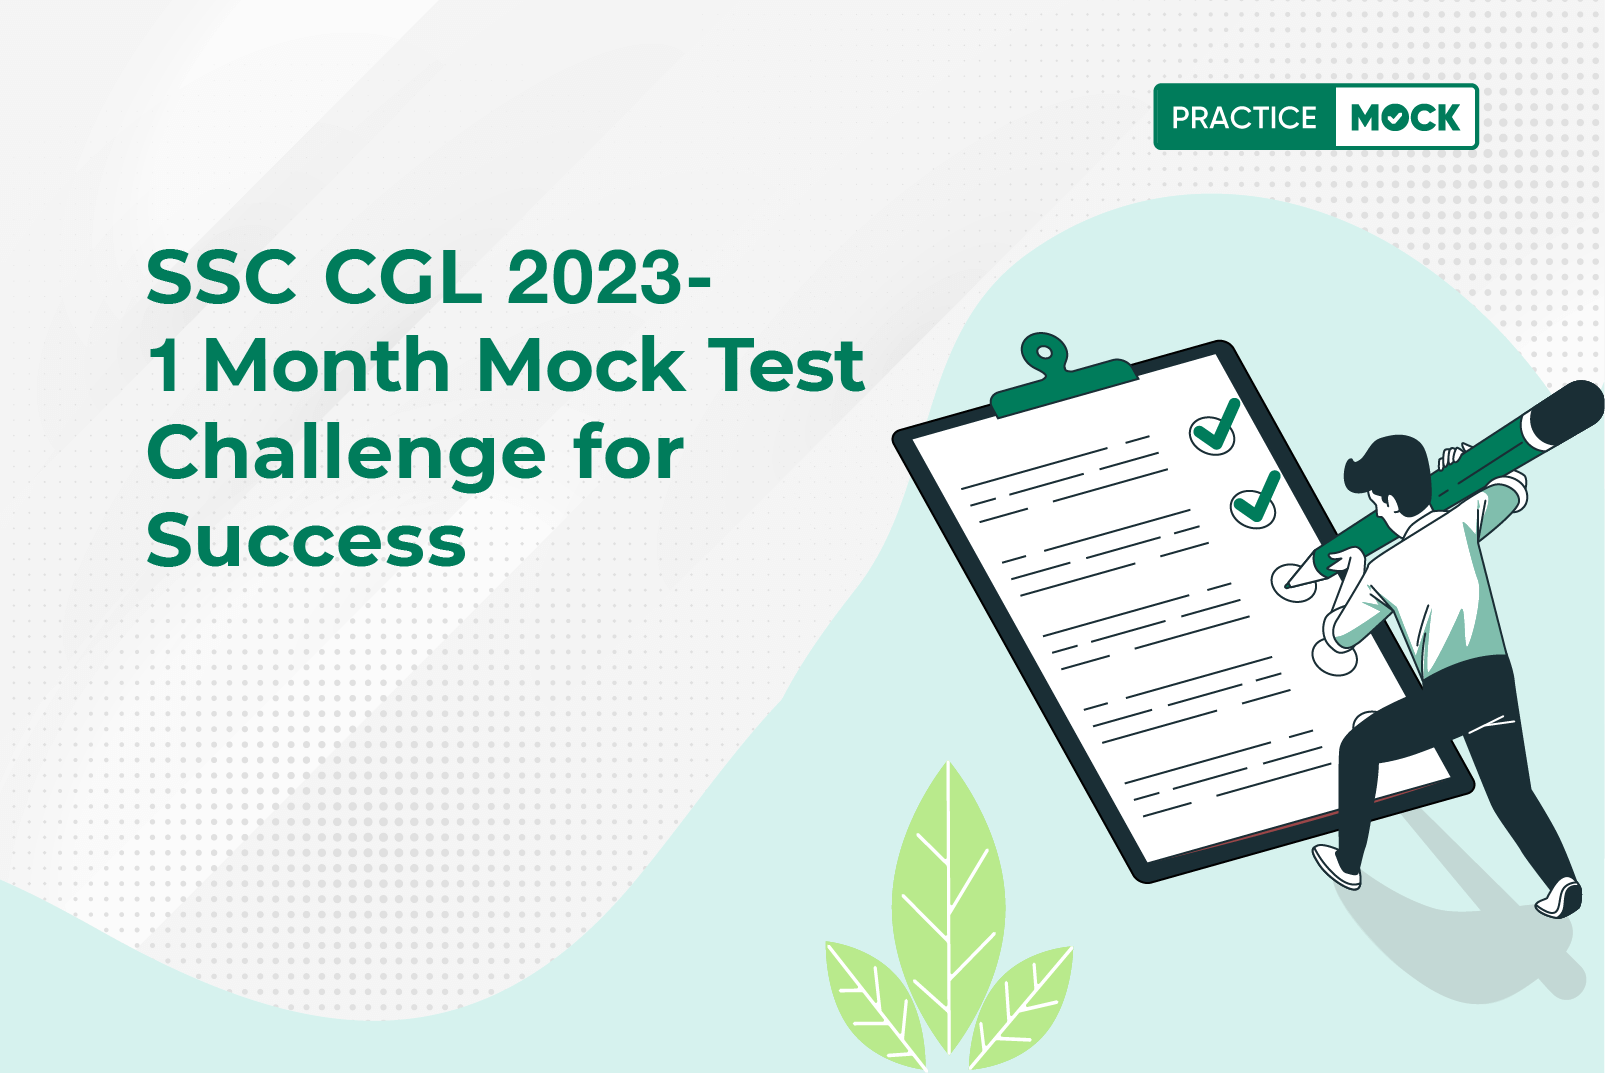 ssc-cgl-2023-1-month-mock-test-challenge-for-success-practicemock